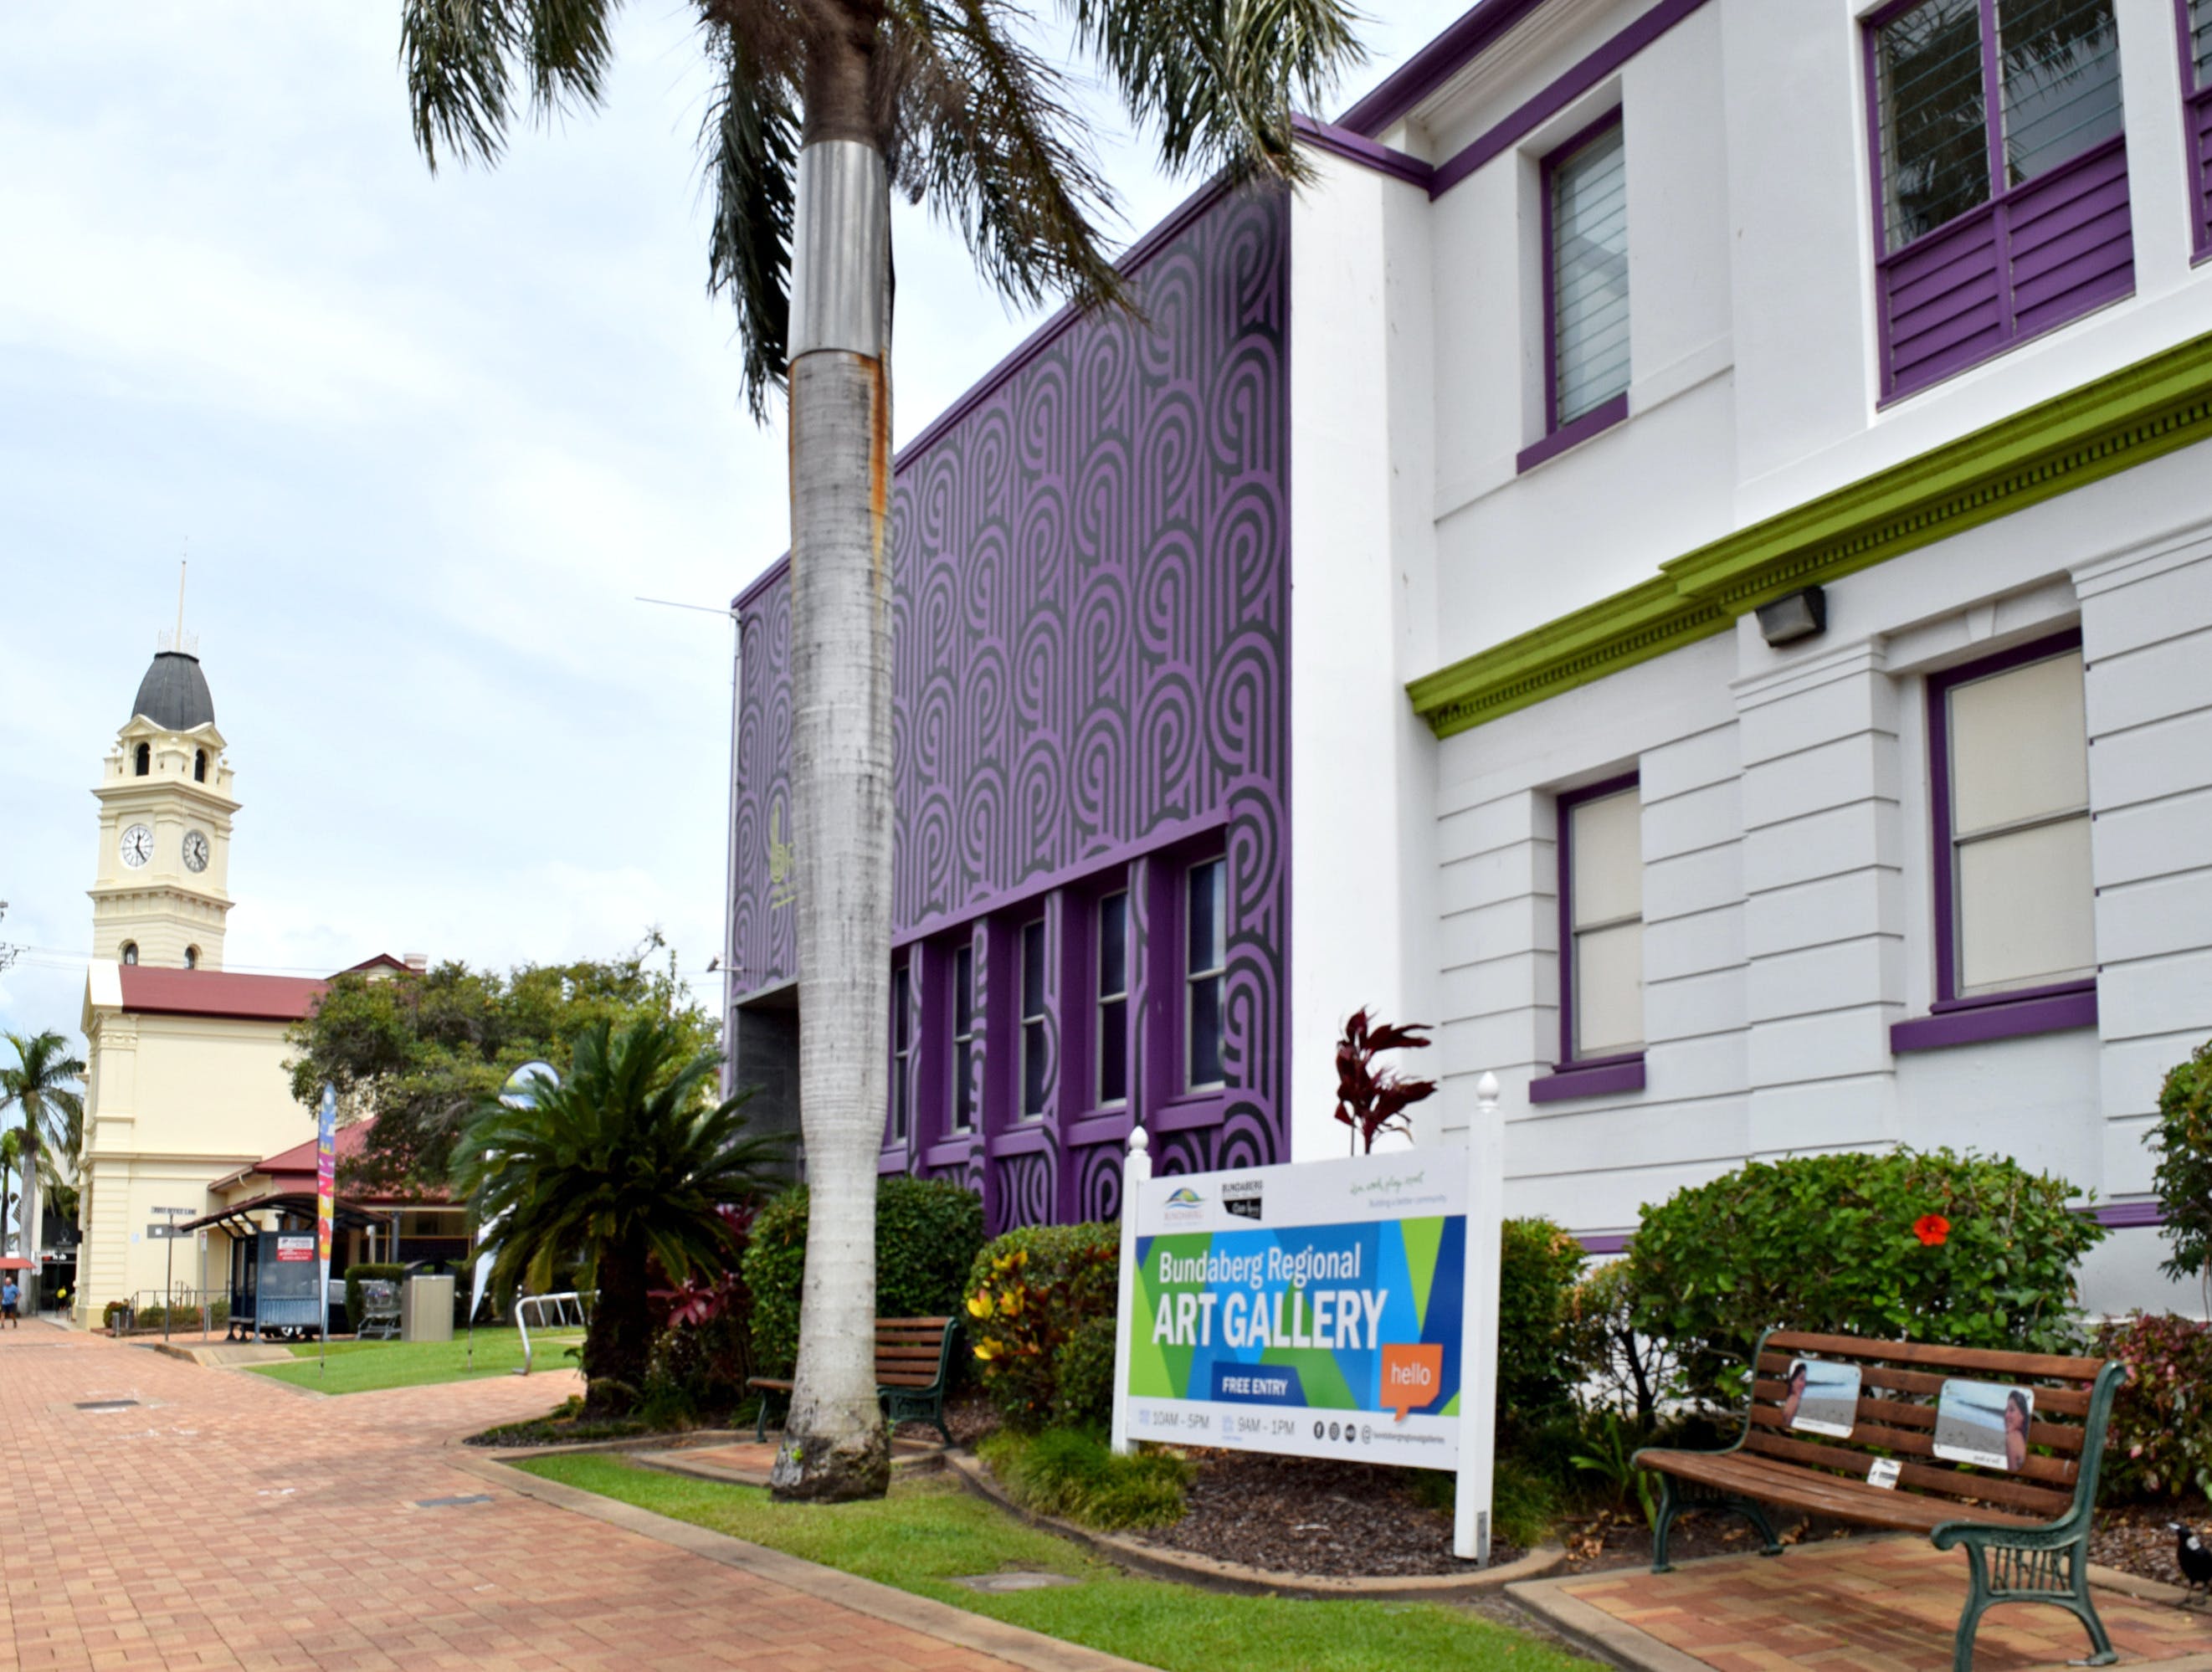 Bundaberg Regional Art Gallery - Kawana Tourism